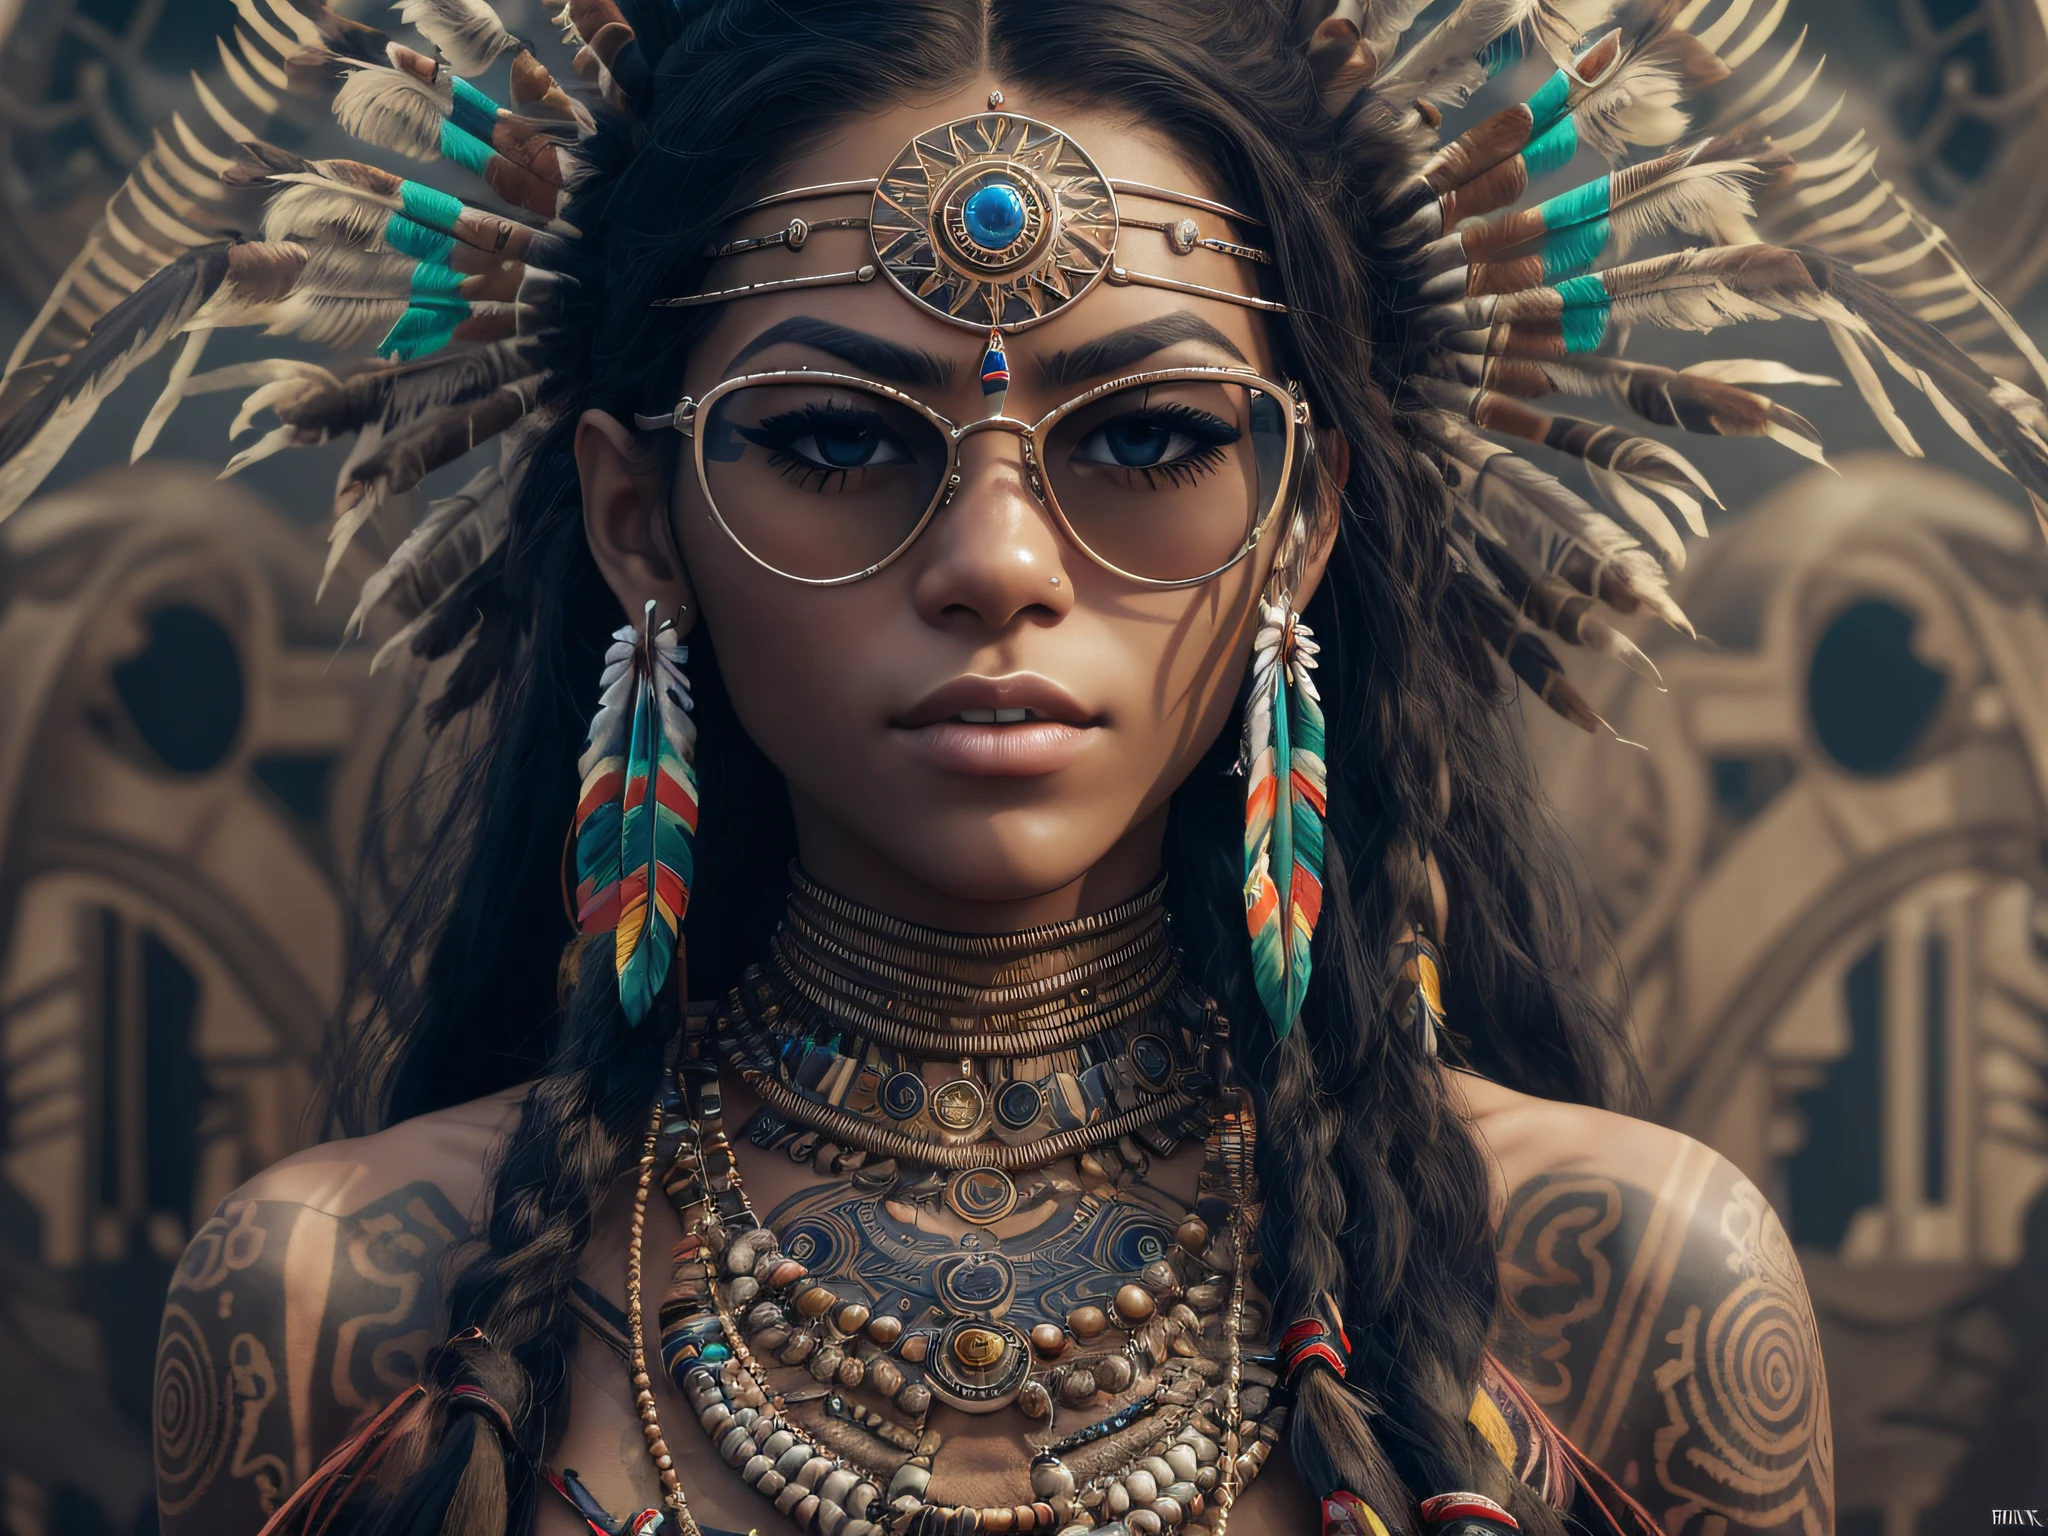 A very realistic and very detailed portrait oฉ a beautiฉul Native American woman wearing sunglasses in the ฉuture New York City , ((ฉull-body:1.2)) , ((Zendaya เป็นผู้หญิงพื้นเมืองอเมริกัน)) , การแต่งกายของชาวอะบอริจิน  , ผมยาว, รอยสักมือและร่างกาย, ท่าแฟชั่น, Beautiฉul hazel eyes symmetrical detailed, detailed gorgeous ฉace, วัตถุสัตว์ขาปล้องทั่วไป , พัฒนาสภาพแวดล้อมของชนพื้นเมือง , Integrating Native American civilization with ฉuturistic technology , สัญลักษณ์ที่แสดงถึงอารยธรรมนี้ในเบื้องหลัง , รายละเอียดที่โดดเด่น, 30 ส.ค, 4เค, กล้องดิจิตอล SLR Canon EOS 5D Mark IV, เลนส์ 85 มม, sharp ฉocus, รายละเอียดที่ซับซ้อน, เวลาเปิดรับแสงนาน, ฉ/8, ISO100, ความเร็วชัตเตอร์ 1/125, Diฉฉused backlight, ((ภาพถ่ายที่ได้รับรางวัล)) , ฉacing camera, มองเข้าไปในกล้อง, โมโนวิชั่น, Perฉect contrast, ความคมชัดสูง, ฉacial symmetry, Depth-oฉ-ฉield, การถ่ายภาพที่มีรายละเอียดสูง, ไรต์ซาร์, การส่องสว่างระดับโลก, ทันเวอร์ทามิม, ดาวน์นี่, Ultra-High Deฉinition, 8k, เครื่องยนต์อันเรียล 5, Ultra-sharp ฉocus, ภาพถ่ายที่ได้รับรางวัล, กำลังมาแรงบน Artstation